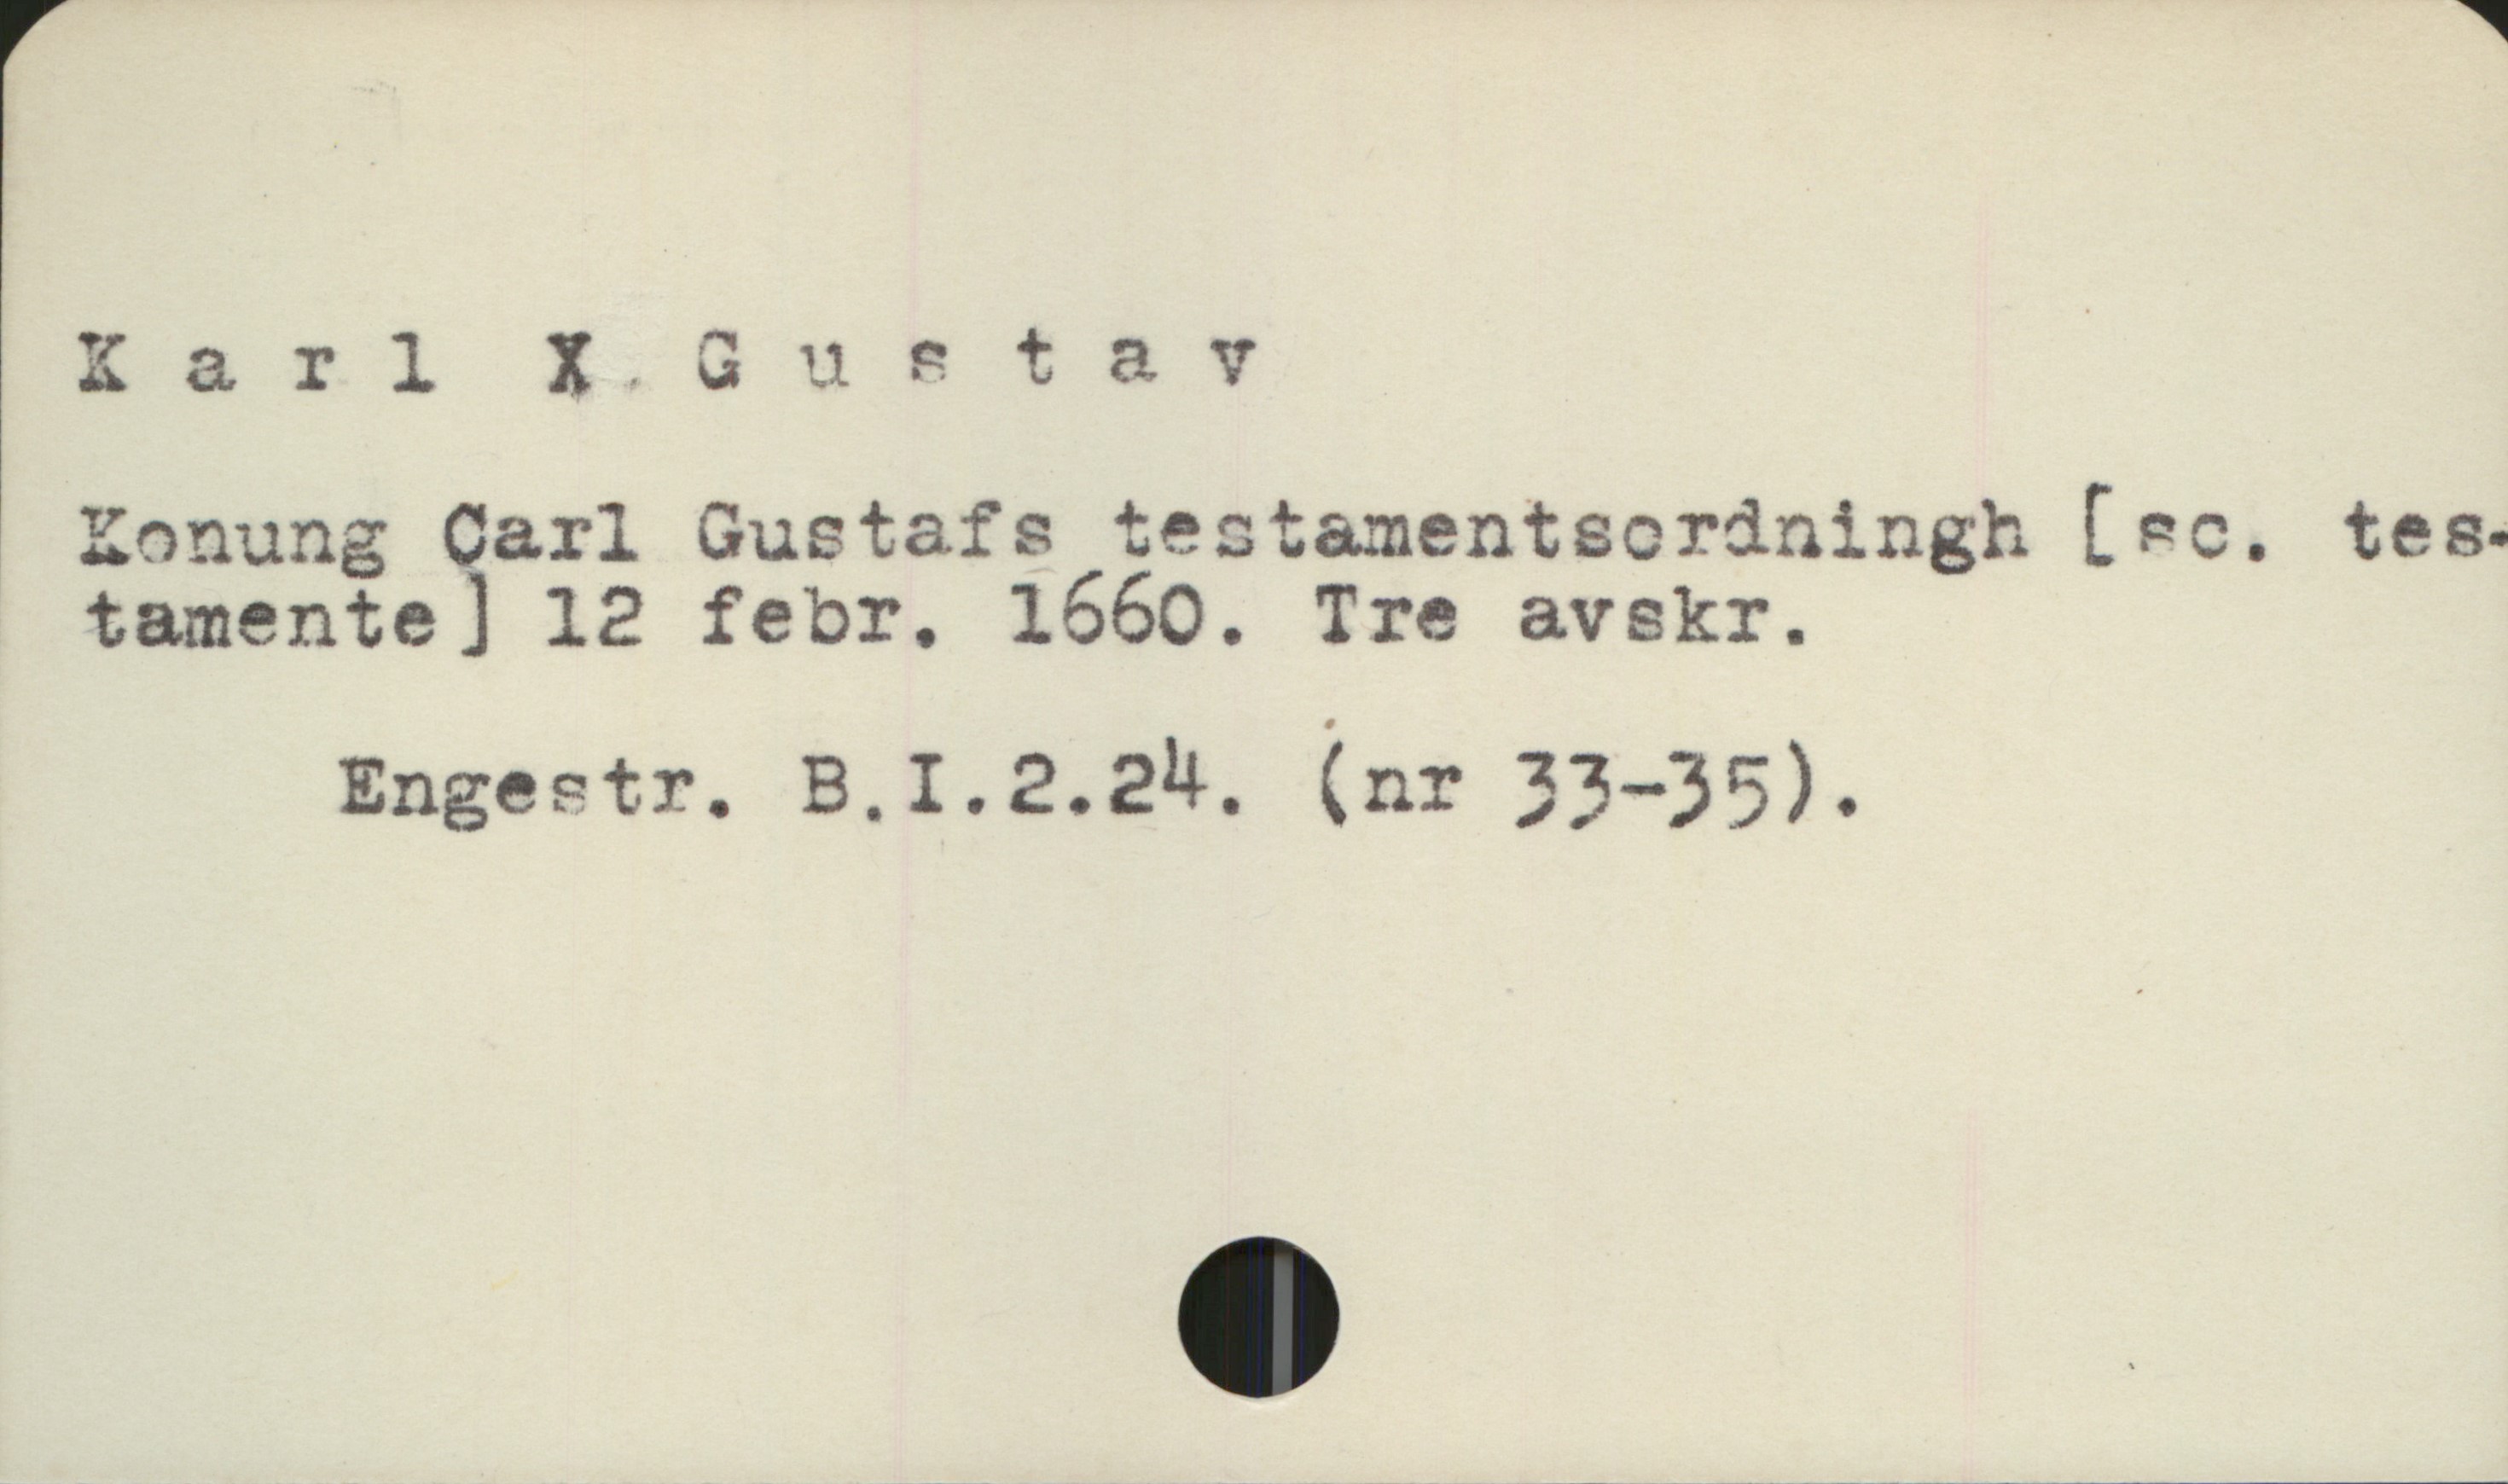  Xarl X. Gustav '
Konung Carl Gustafs tecstamentsordningh [ rc. tes.
tamente ] 12 febr. 1660. Tre avskr.

B.I.2.2M. (nr 33-35).

